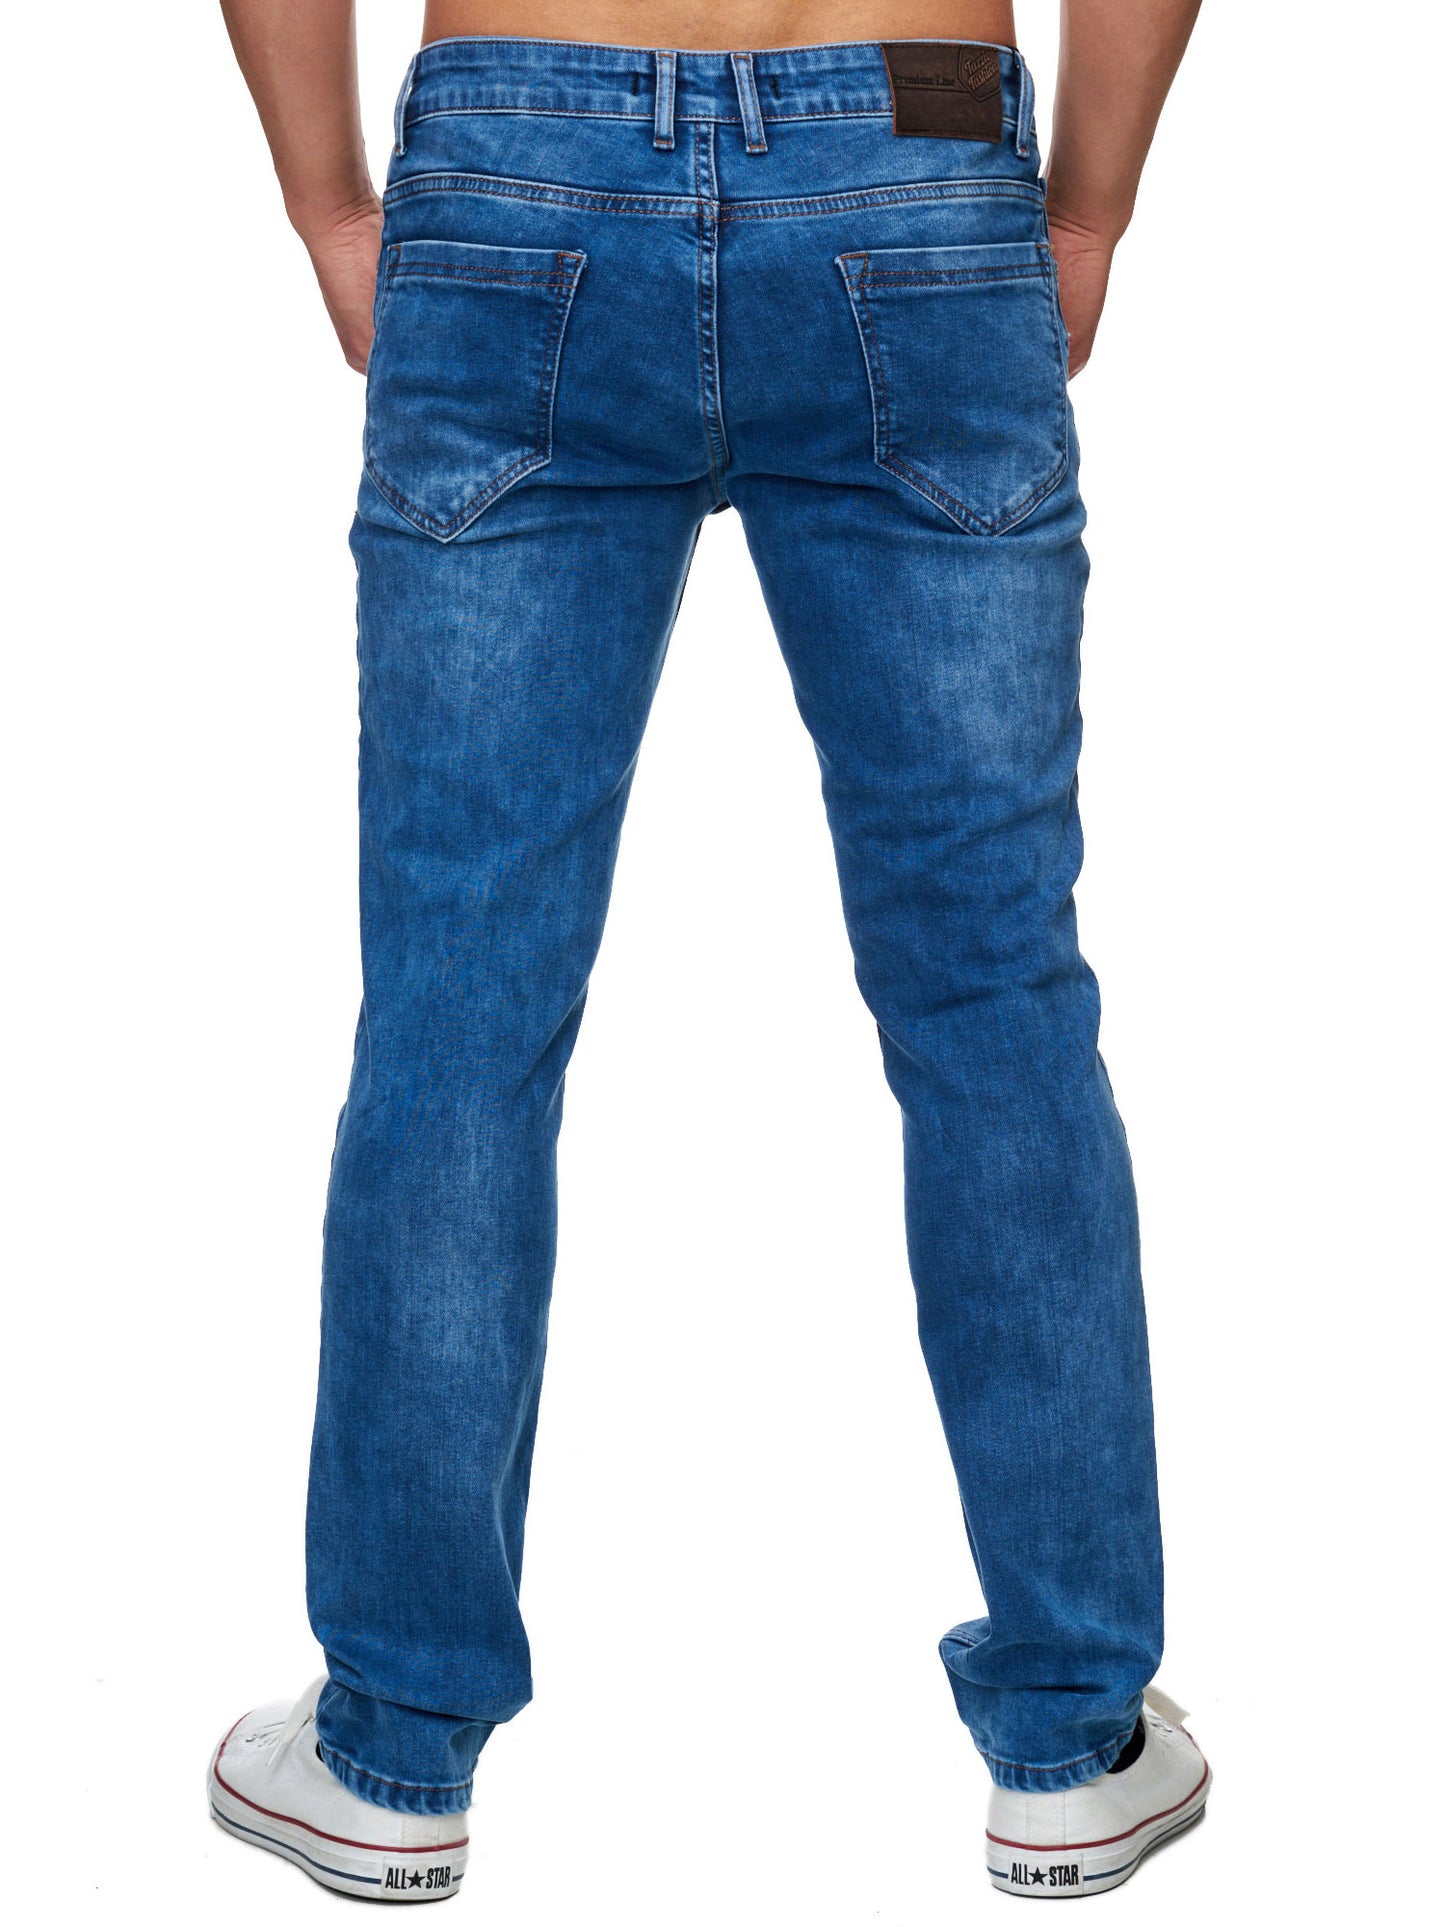 Tazzio Herren Jeans Slim Fit 16533 Blau